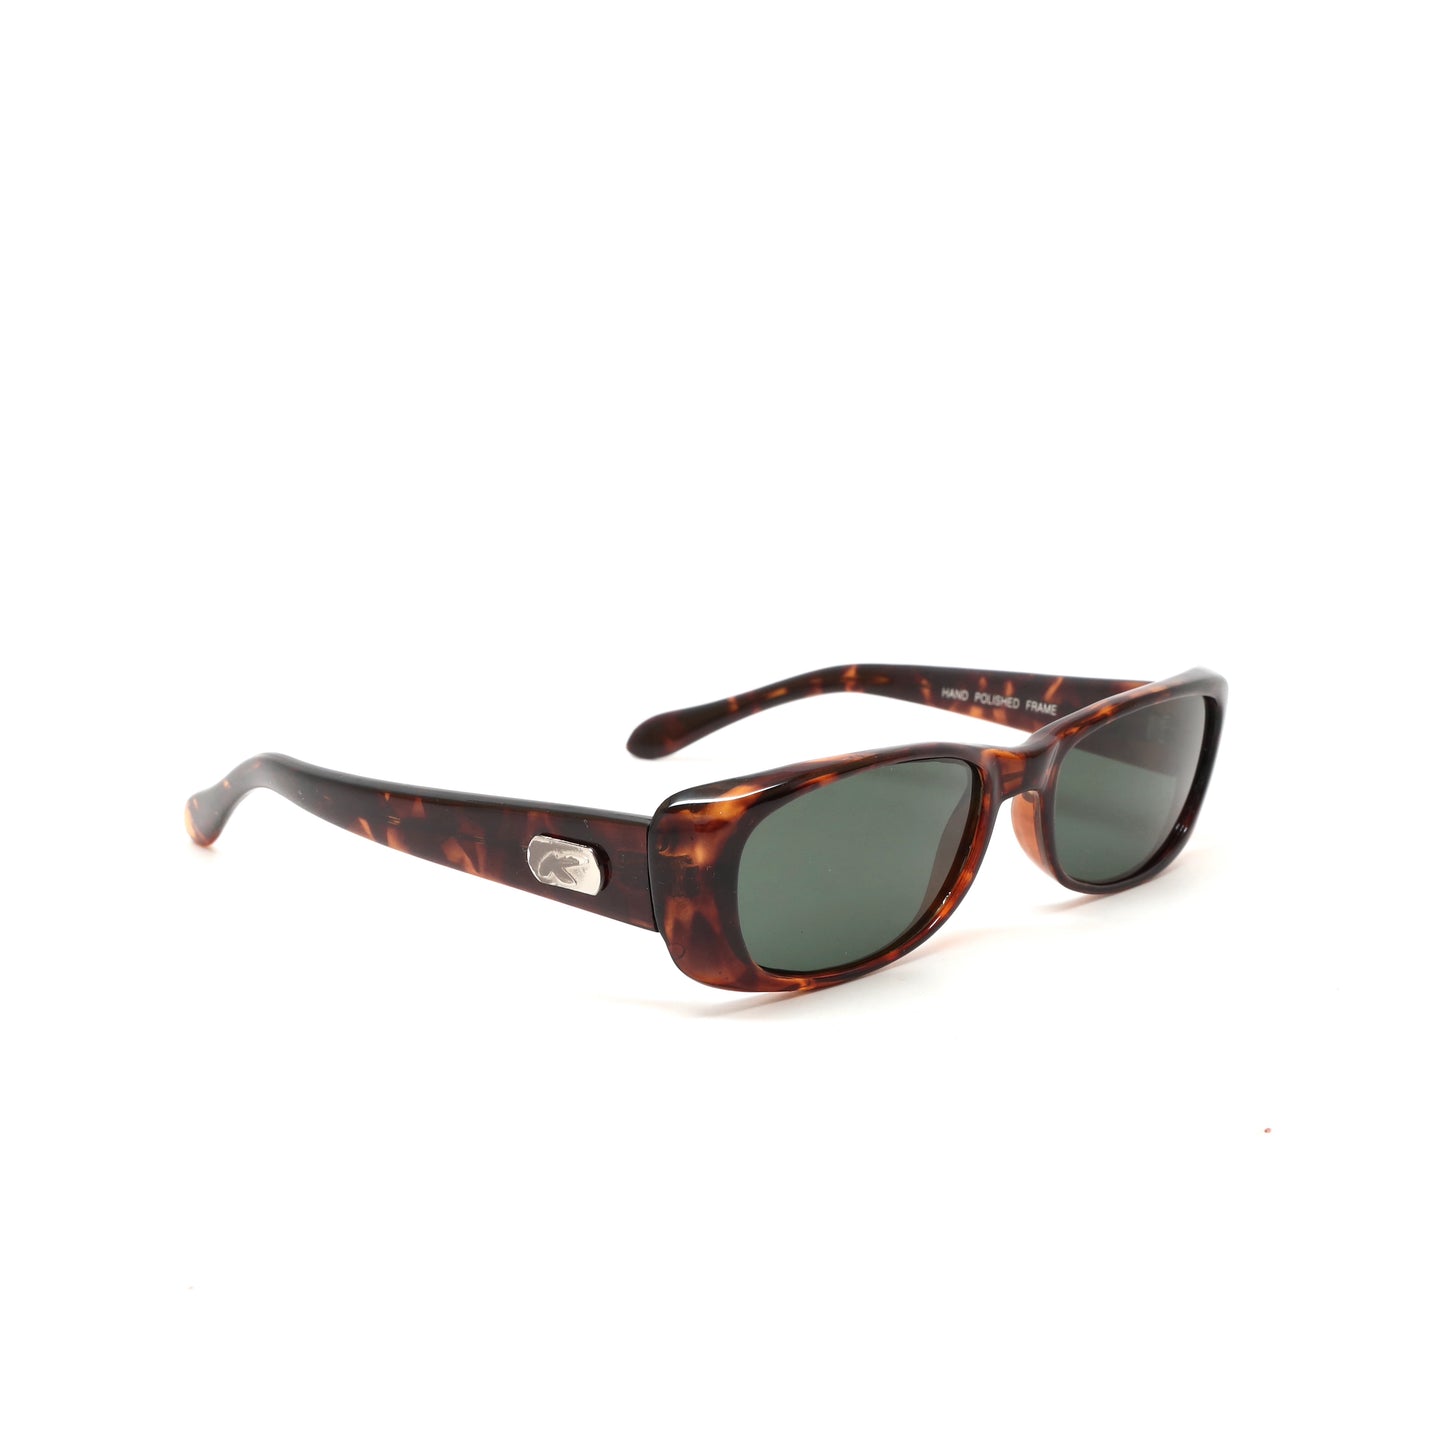 Vintage Small Sized 90s Mod Rectangle Sunglasses - Dark Tortoise